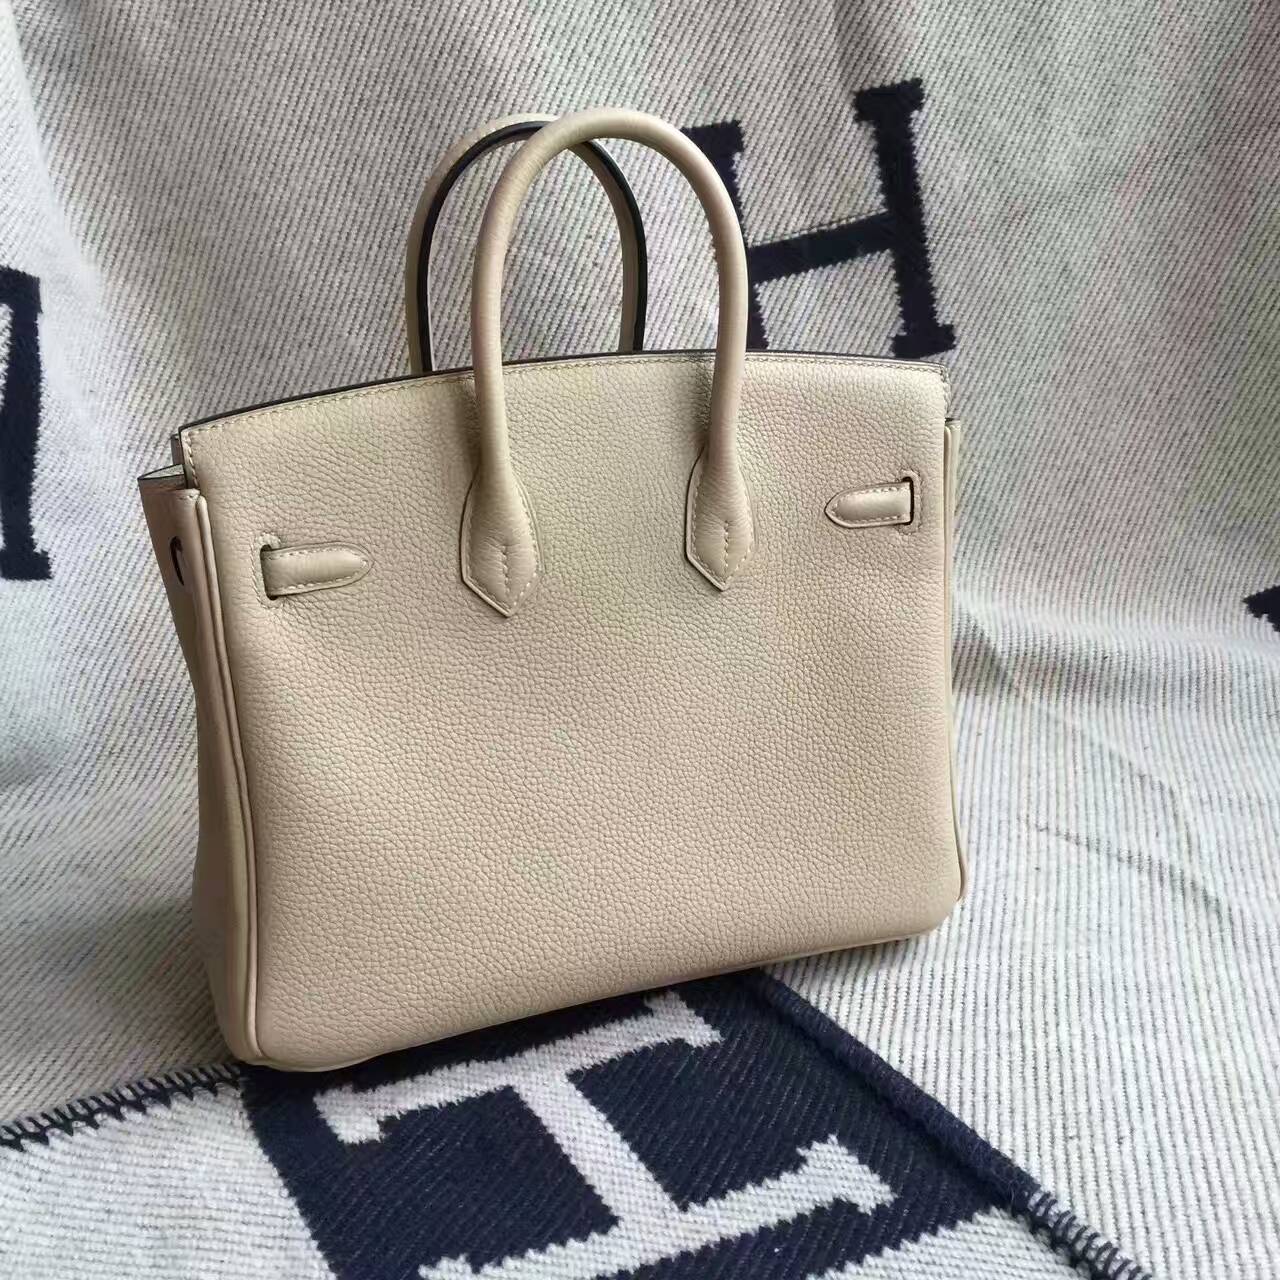 Wholesale Hermes Togo Calskin Leather Birkin25cm Handbag in S2 Coat Grey